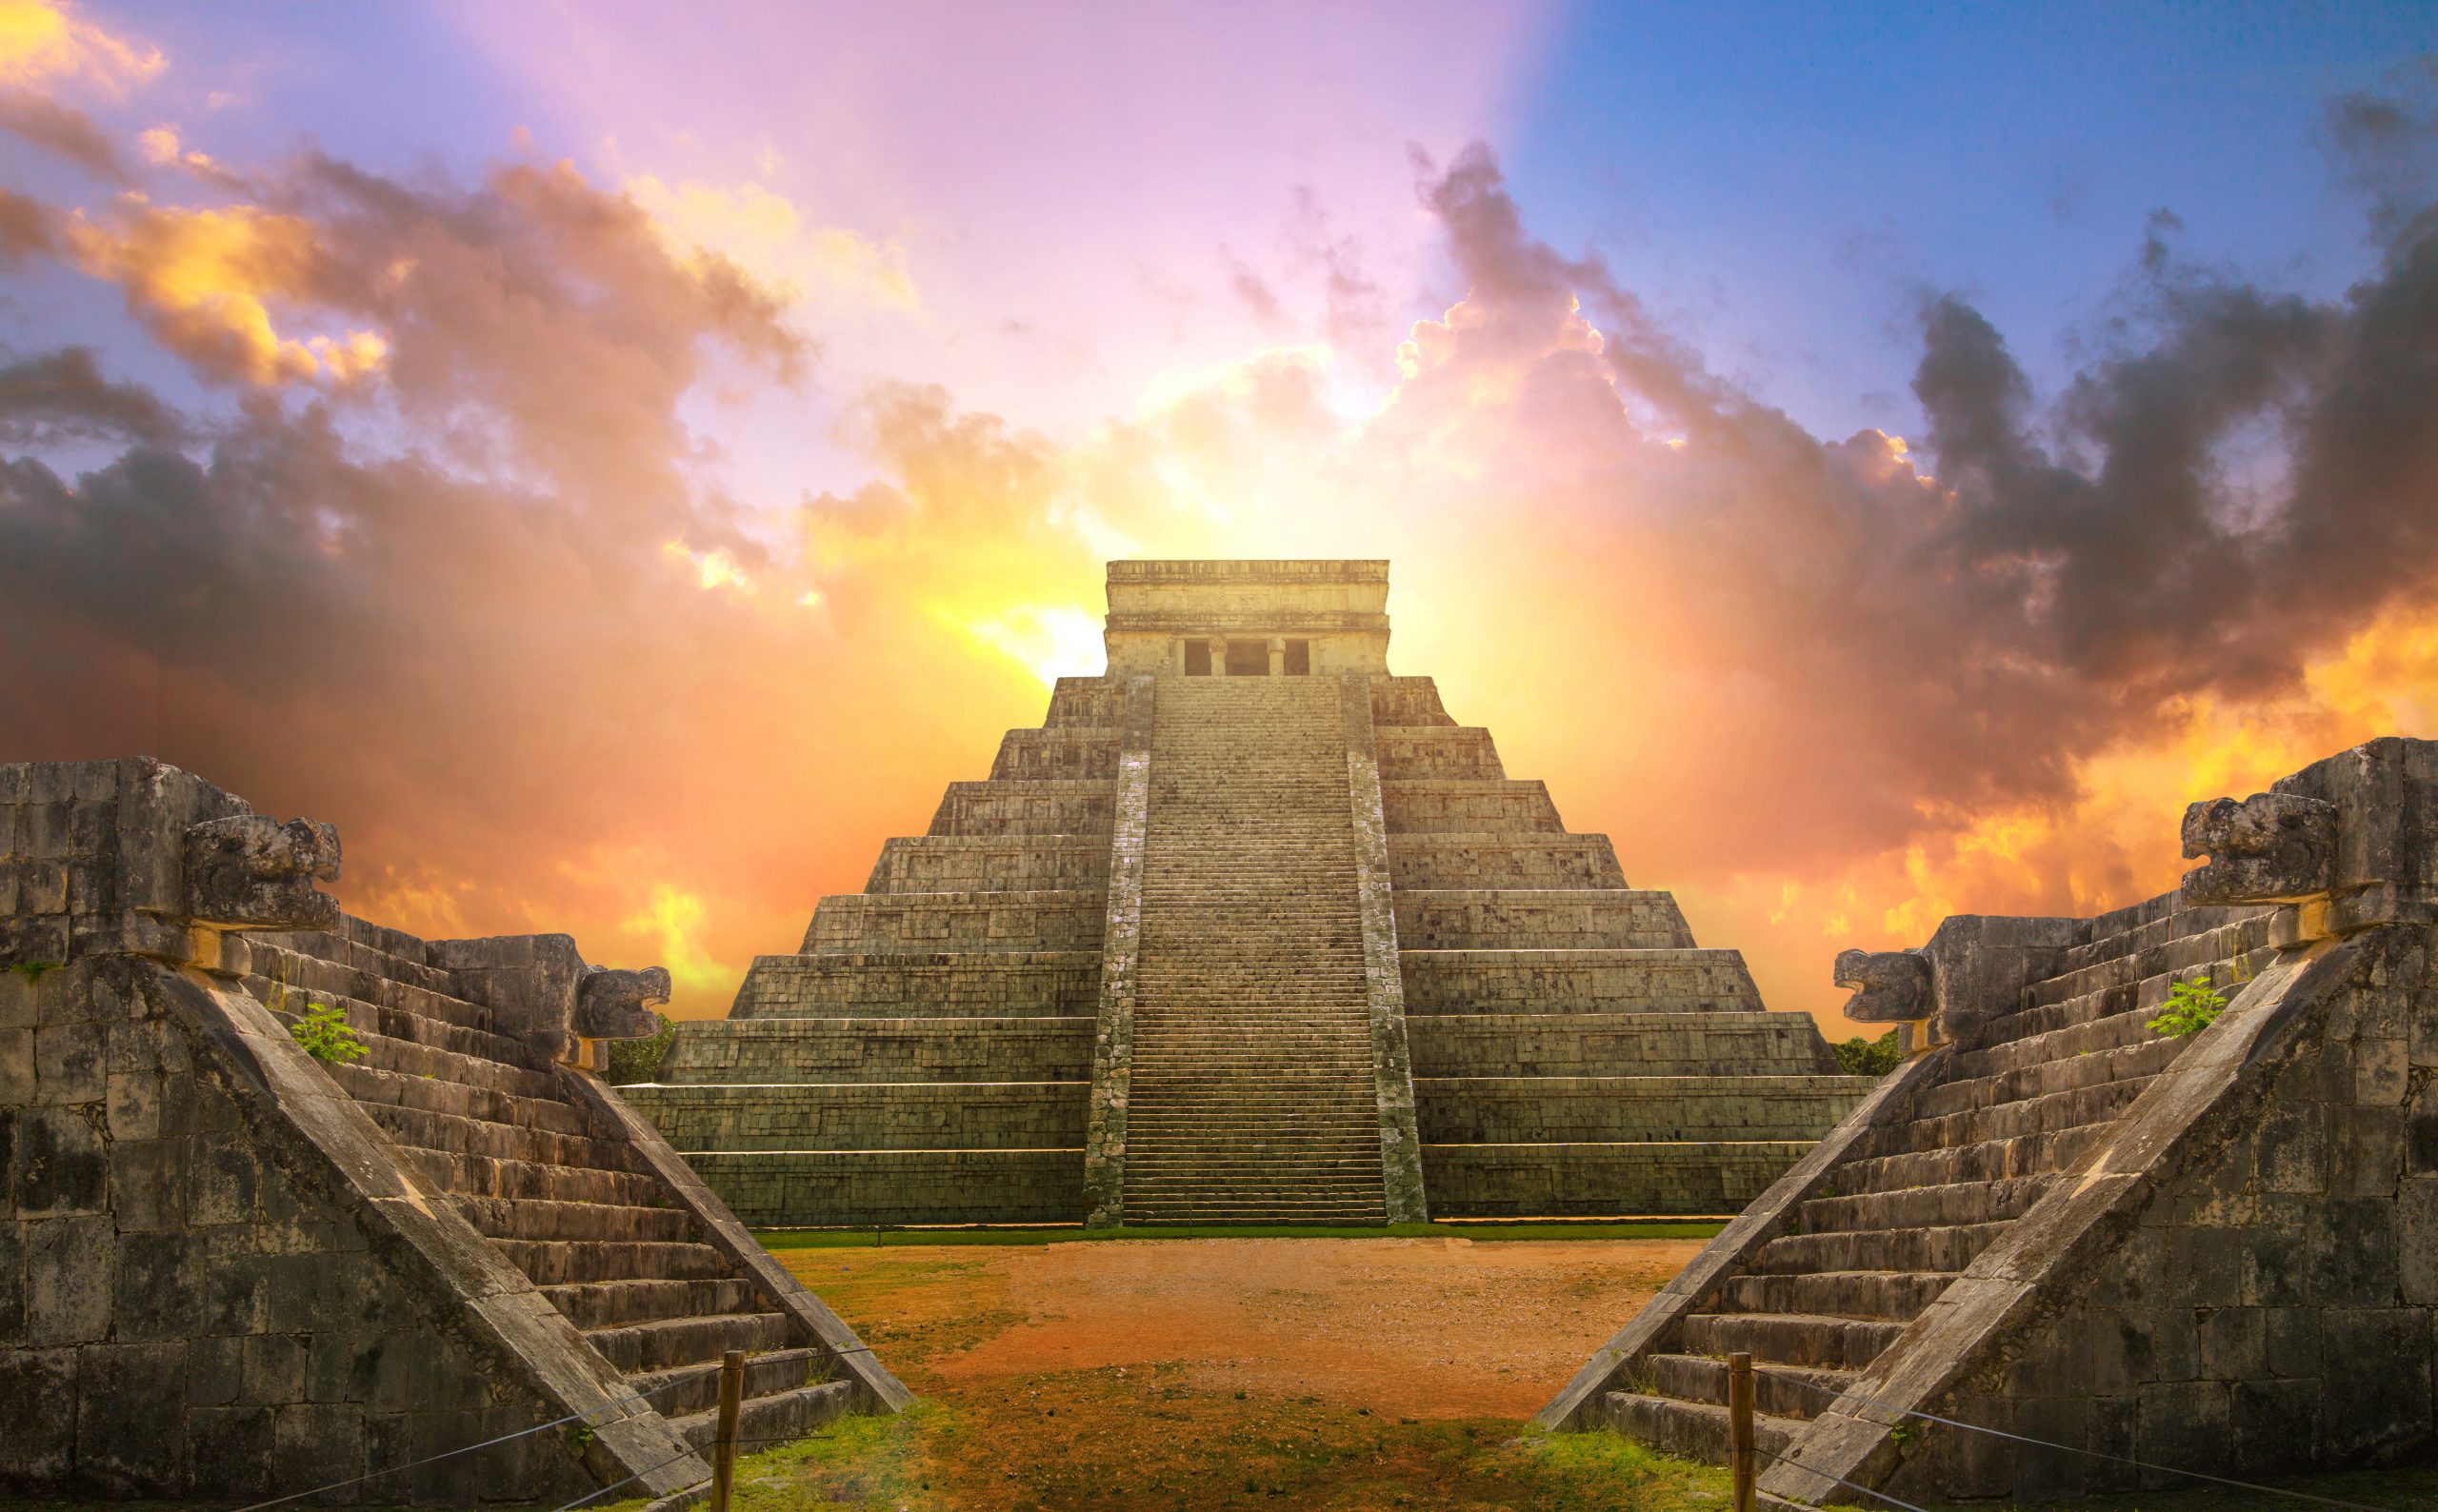 mayan pyramids